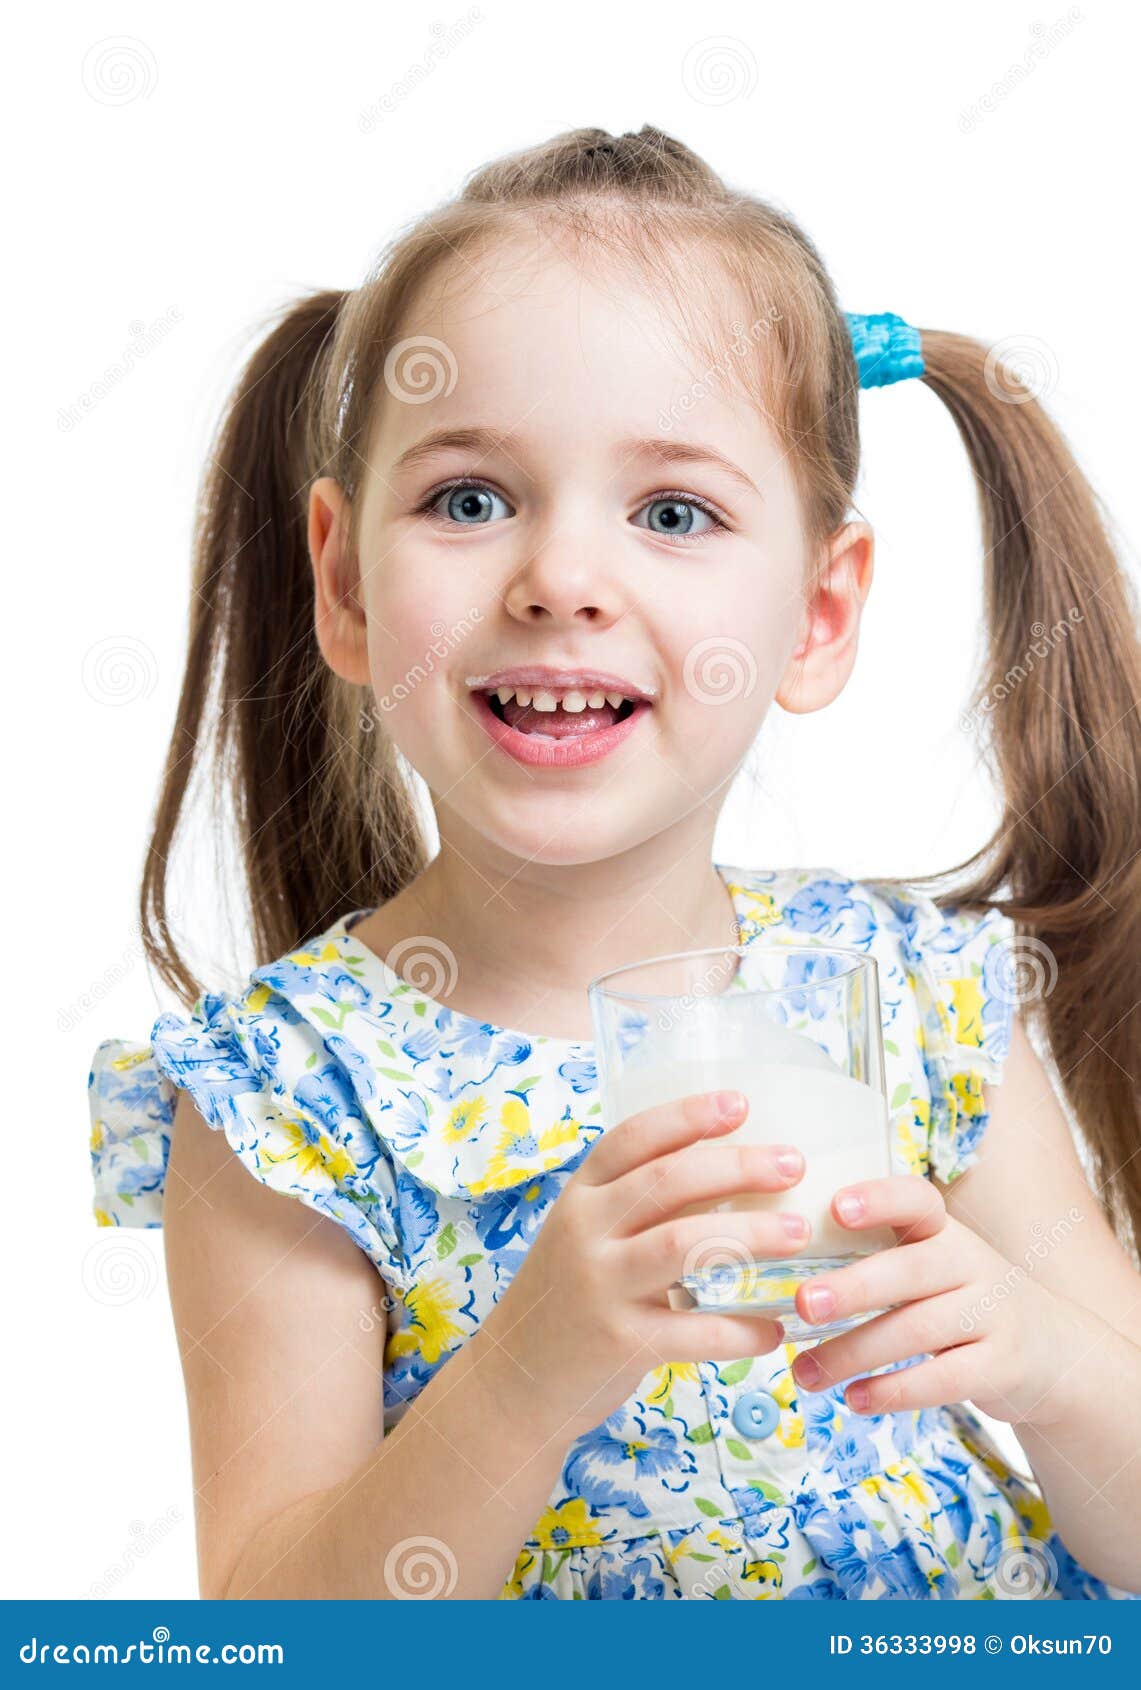 Kid girl drinking yogurt or kefir - kid-girl-drinking-yogurt-kefir-isolated-over-white-36333998